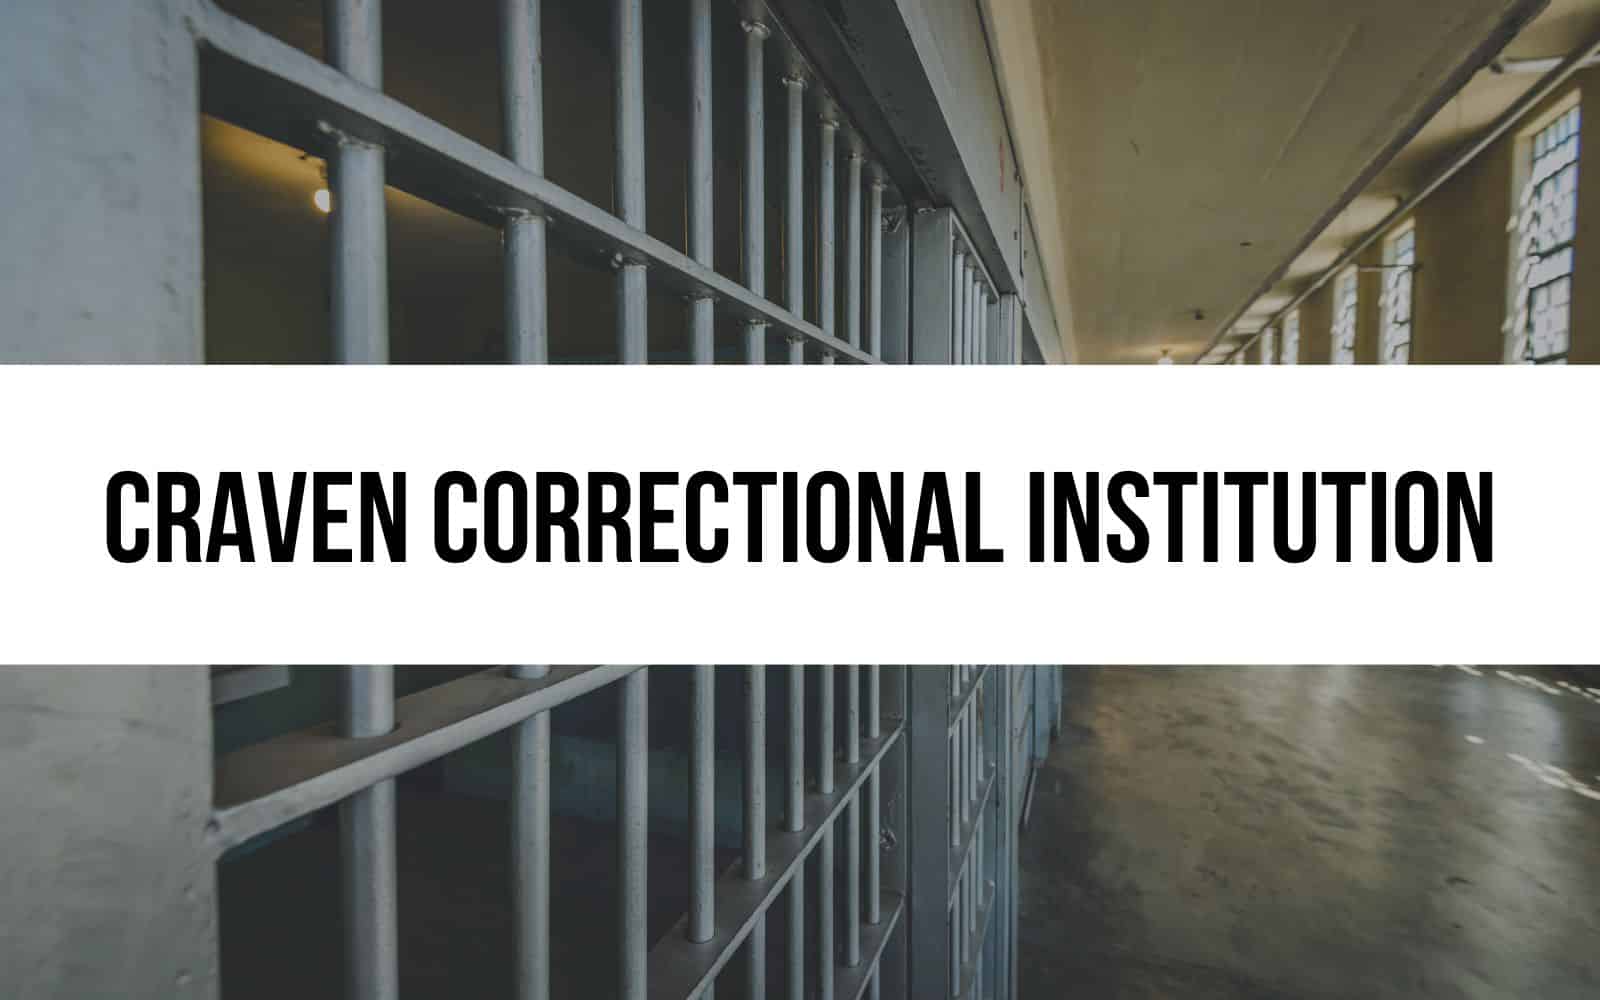 Craven Correctional Institution